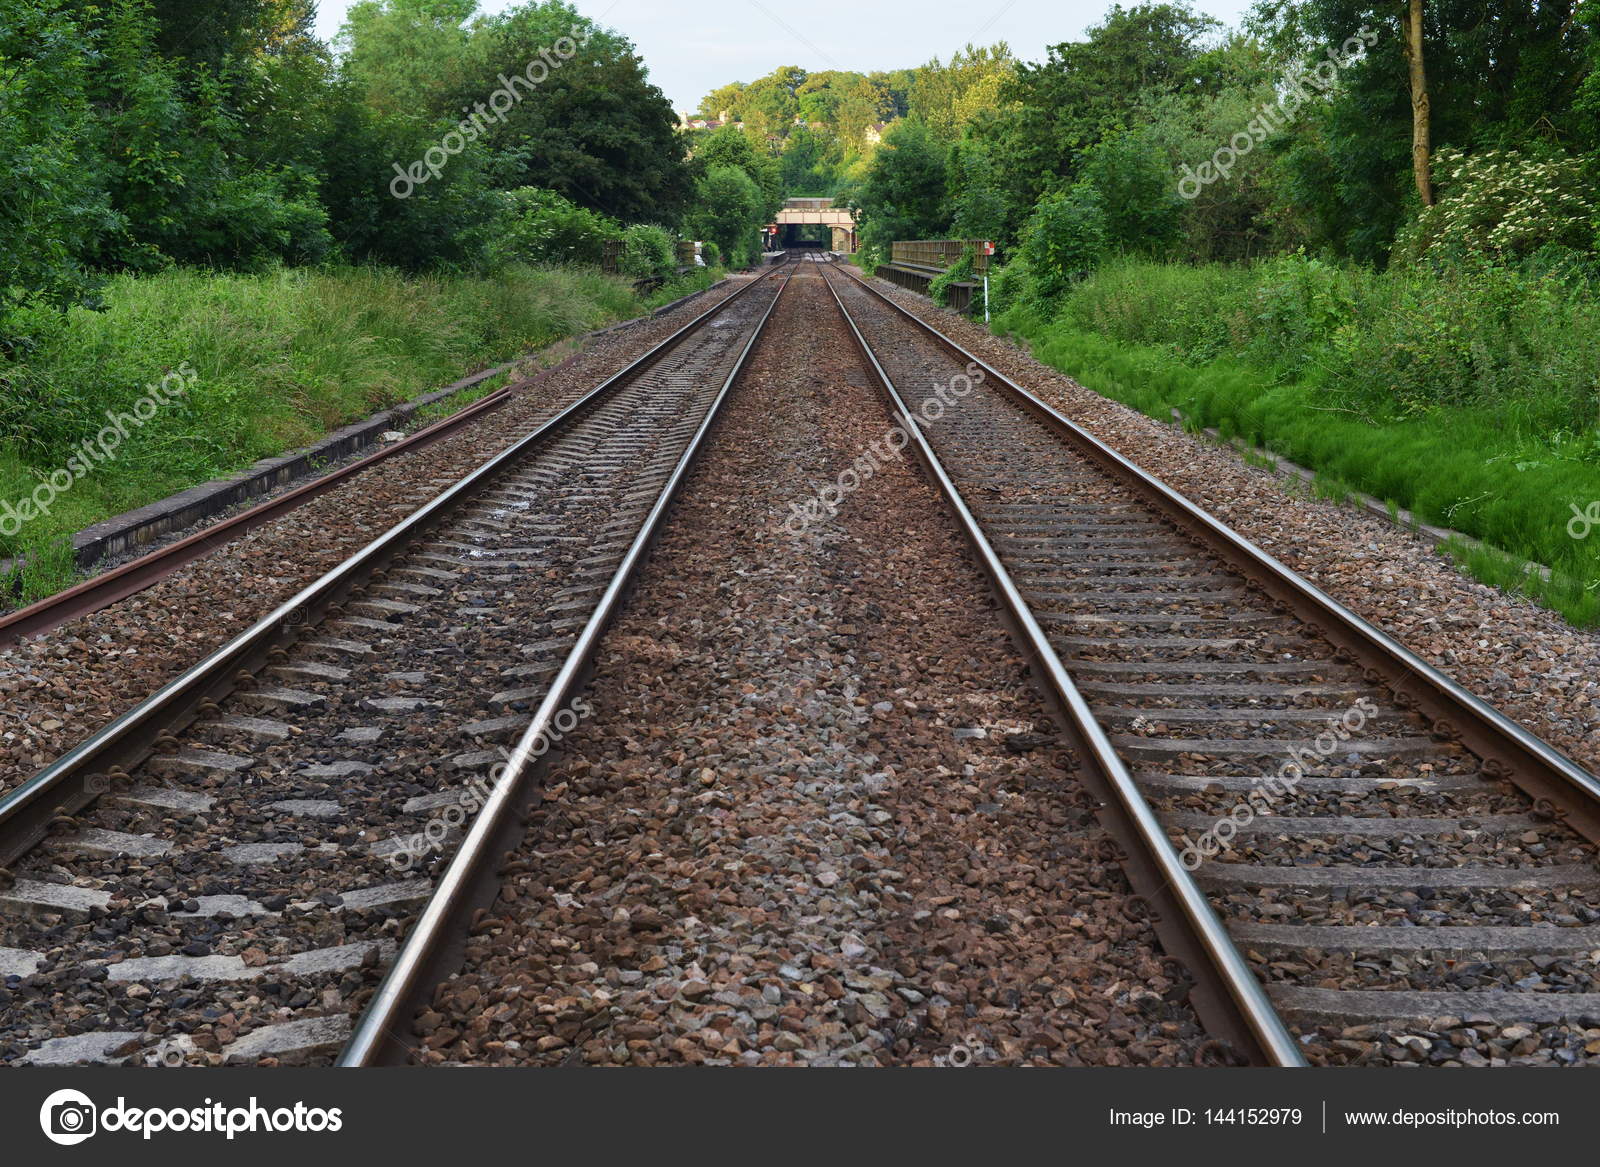 Railway Tracks Background – Stock Editorial Photo © 1000Words #144152979